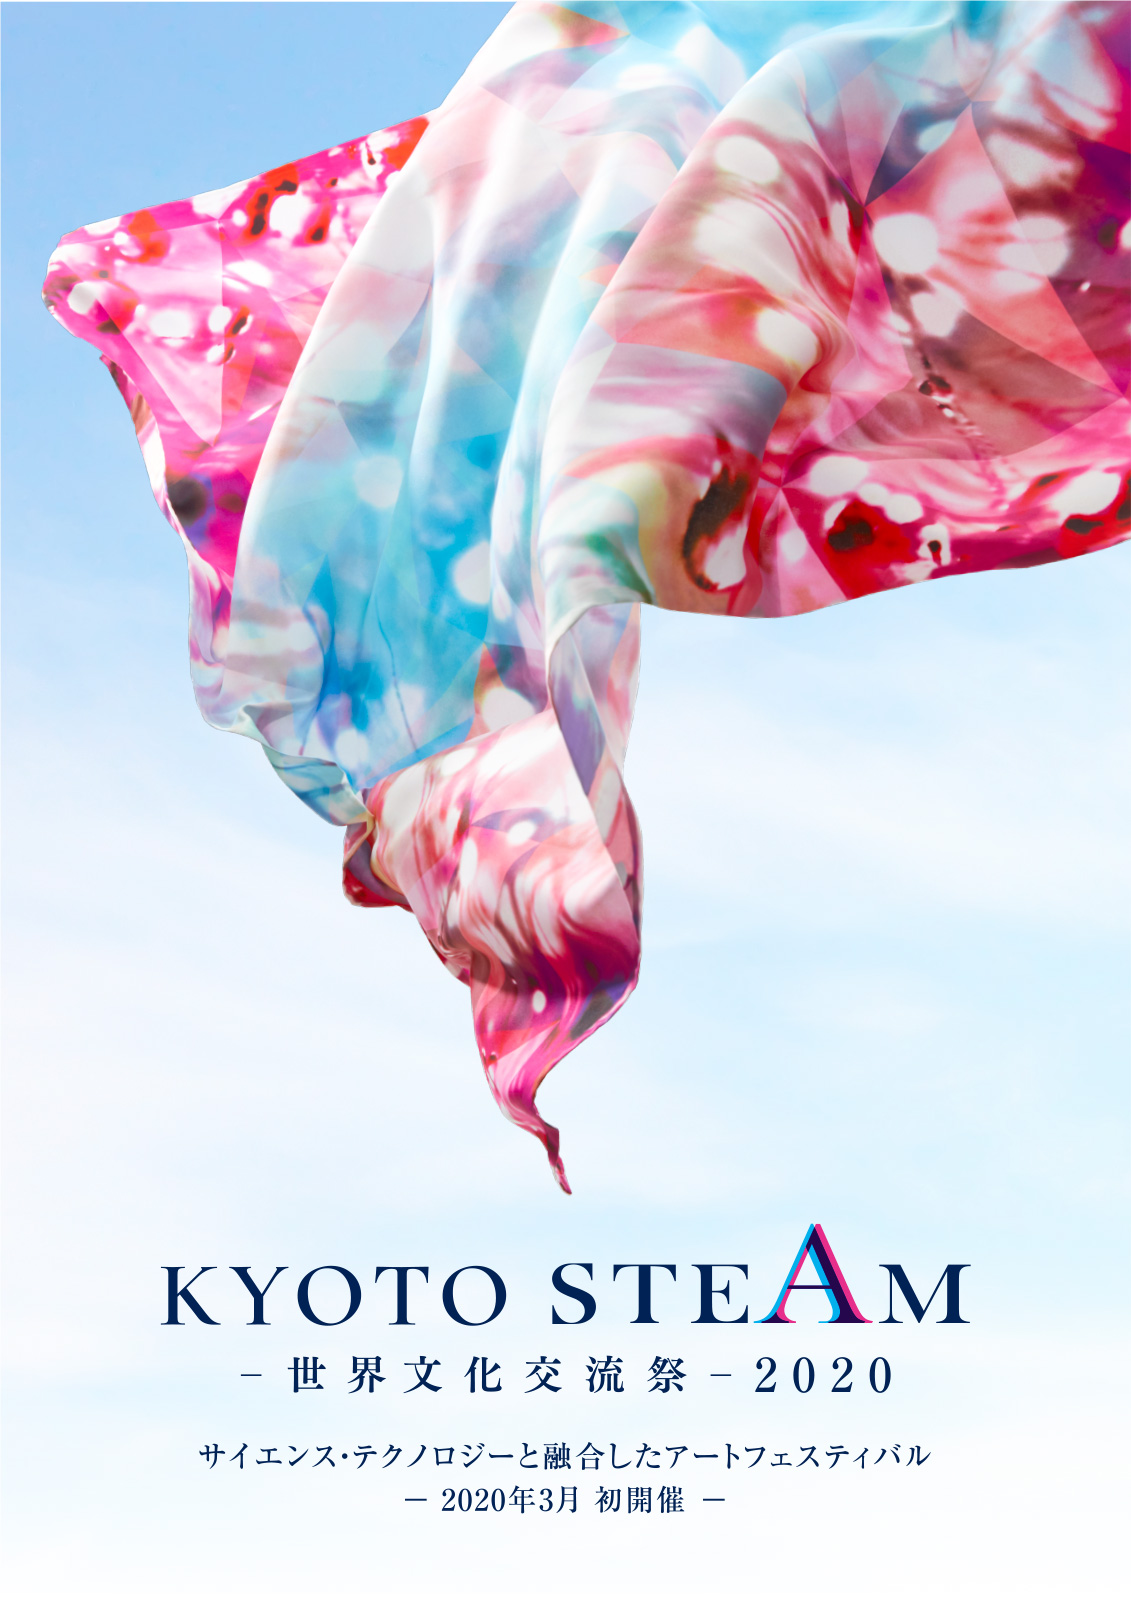 KYOTO STEAM －世界文化交流祭－2020 サイエンス・テクノロジーと融合したアートフェスティバル − 2020年3月 初開催 −